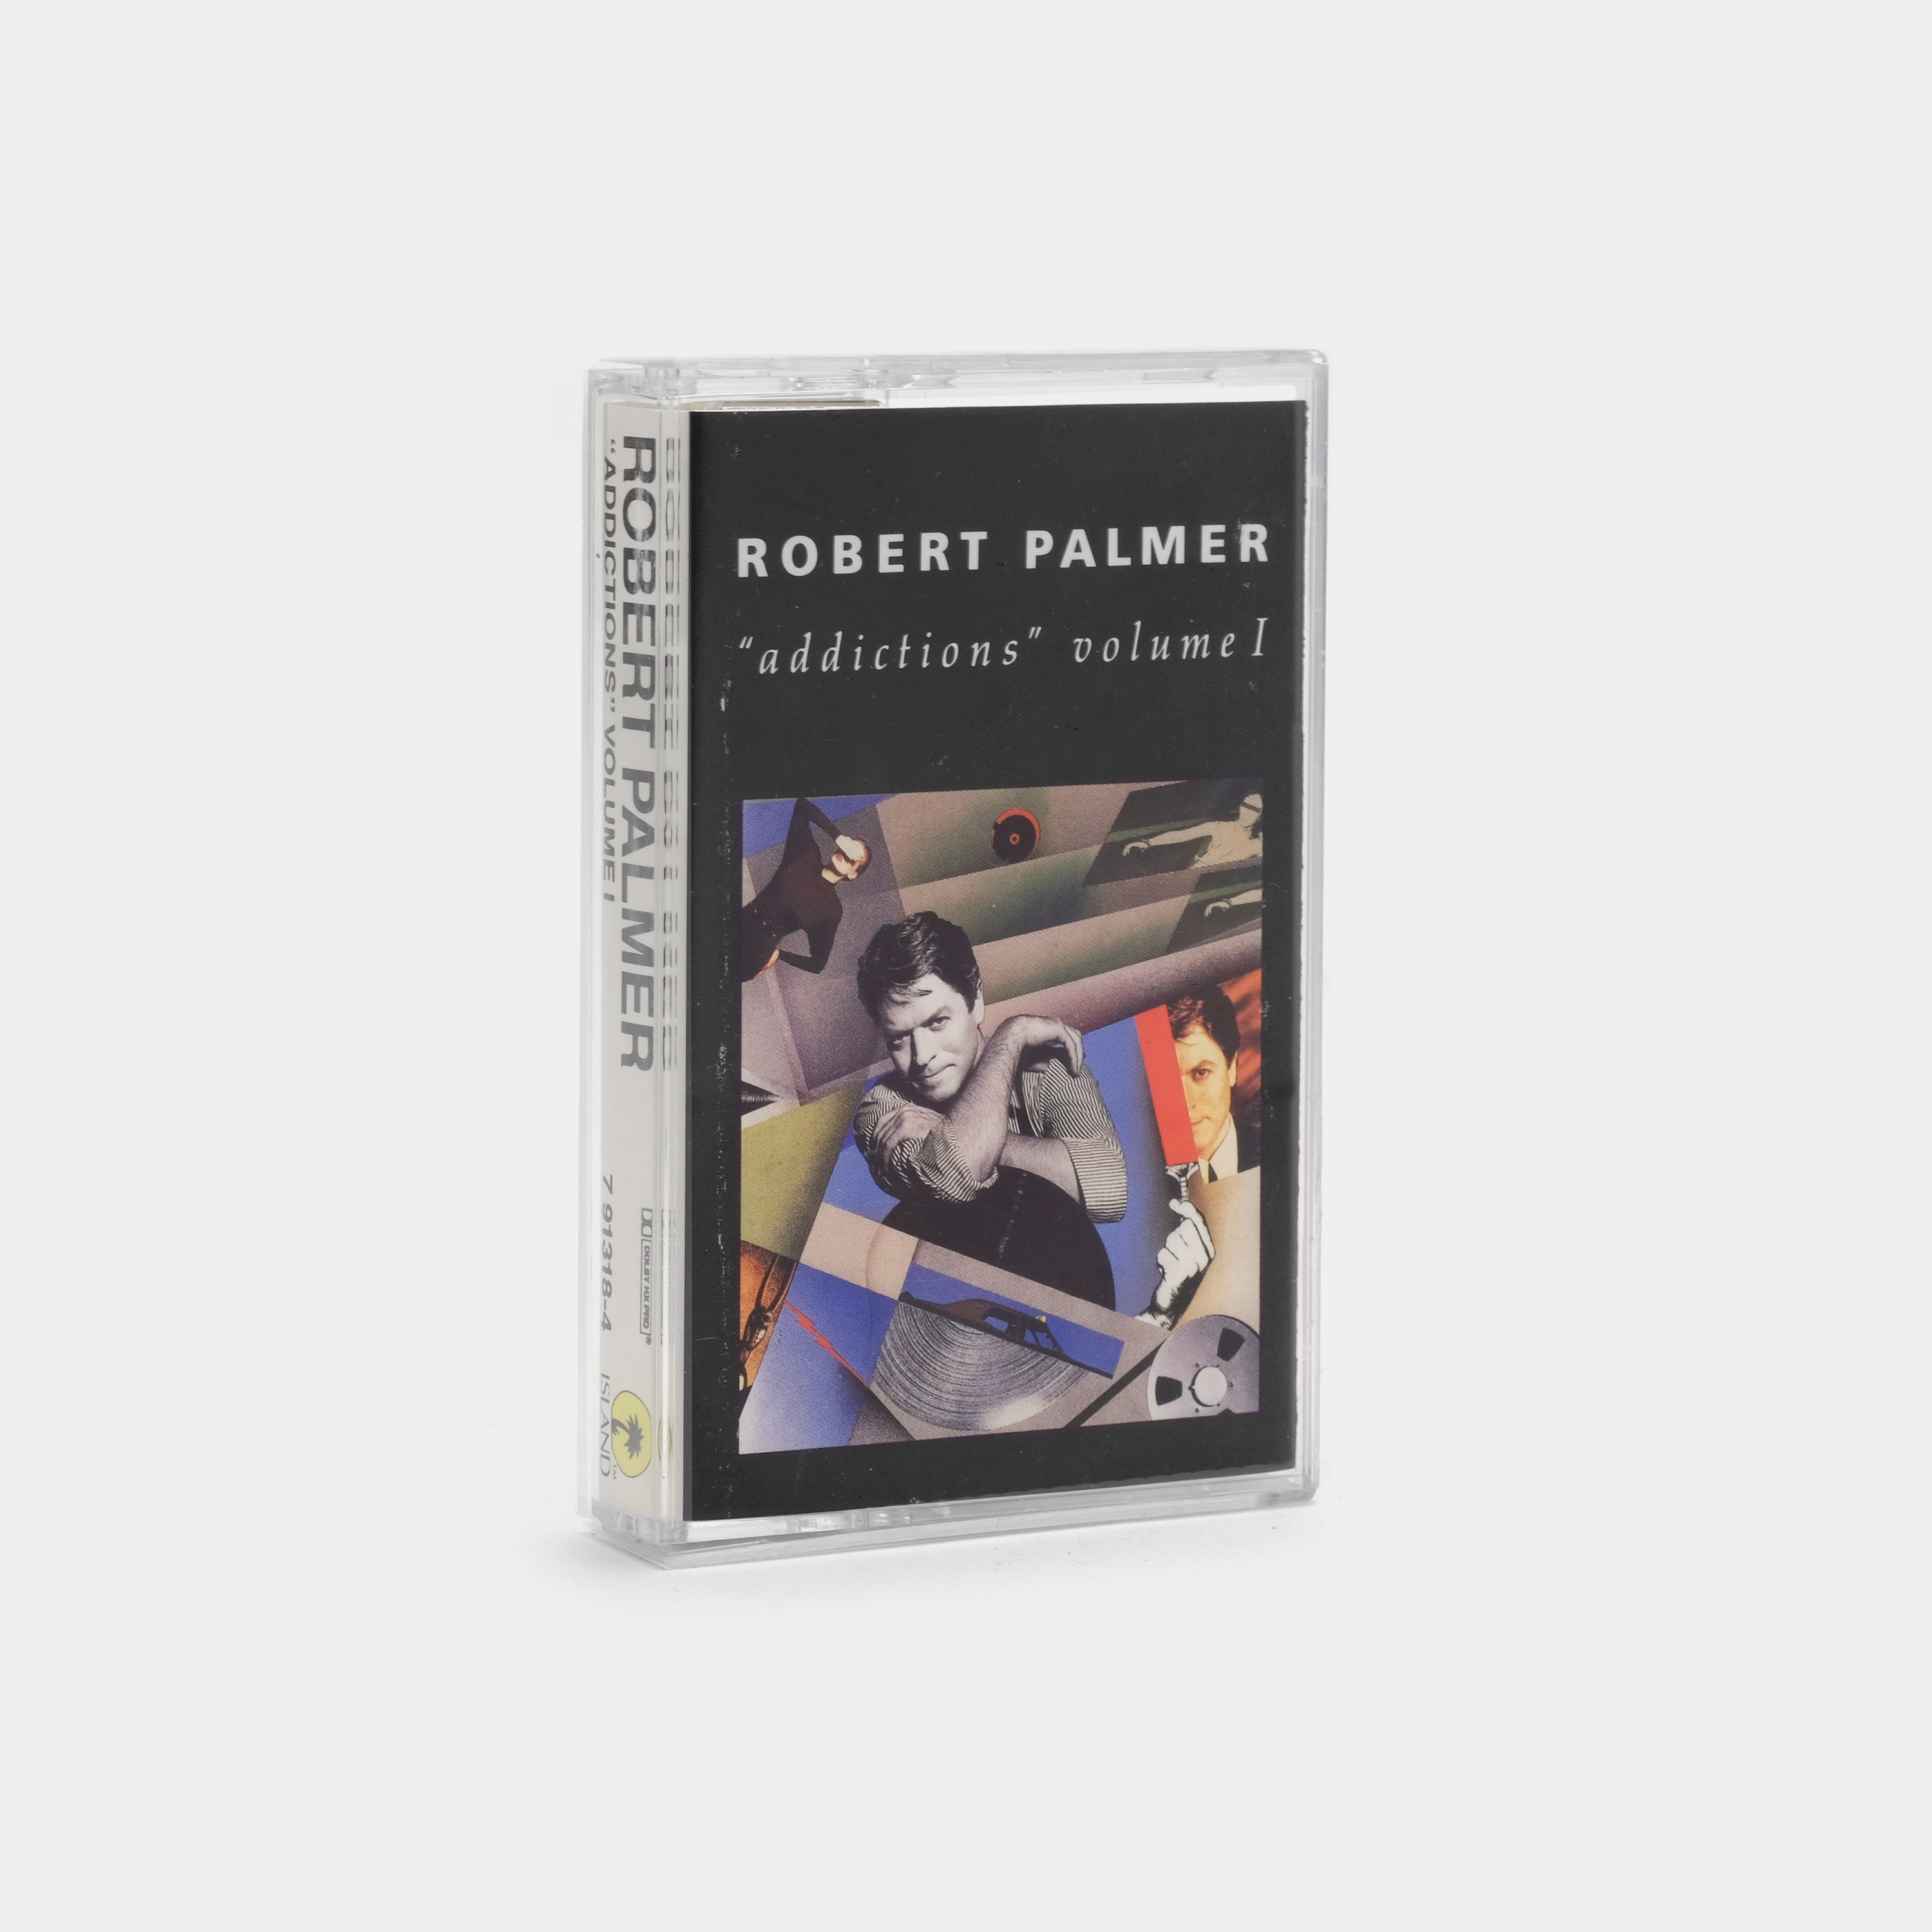 Robert Palmer - Addictions Volume 1 Cassette Tape